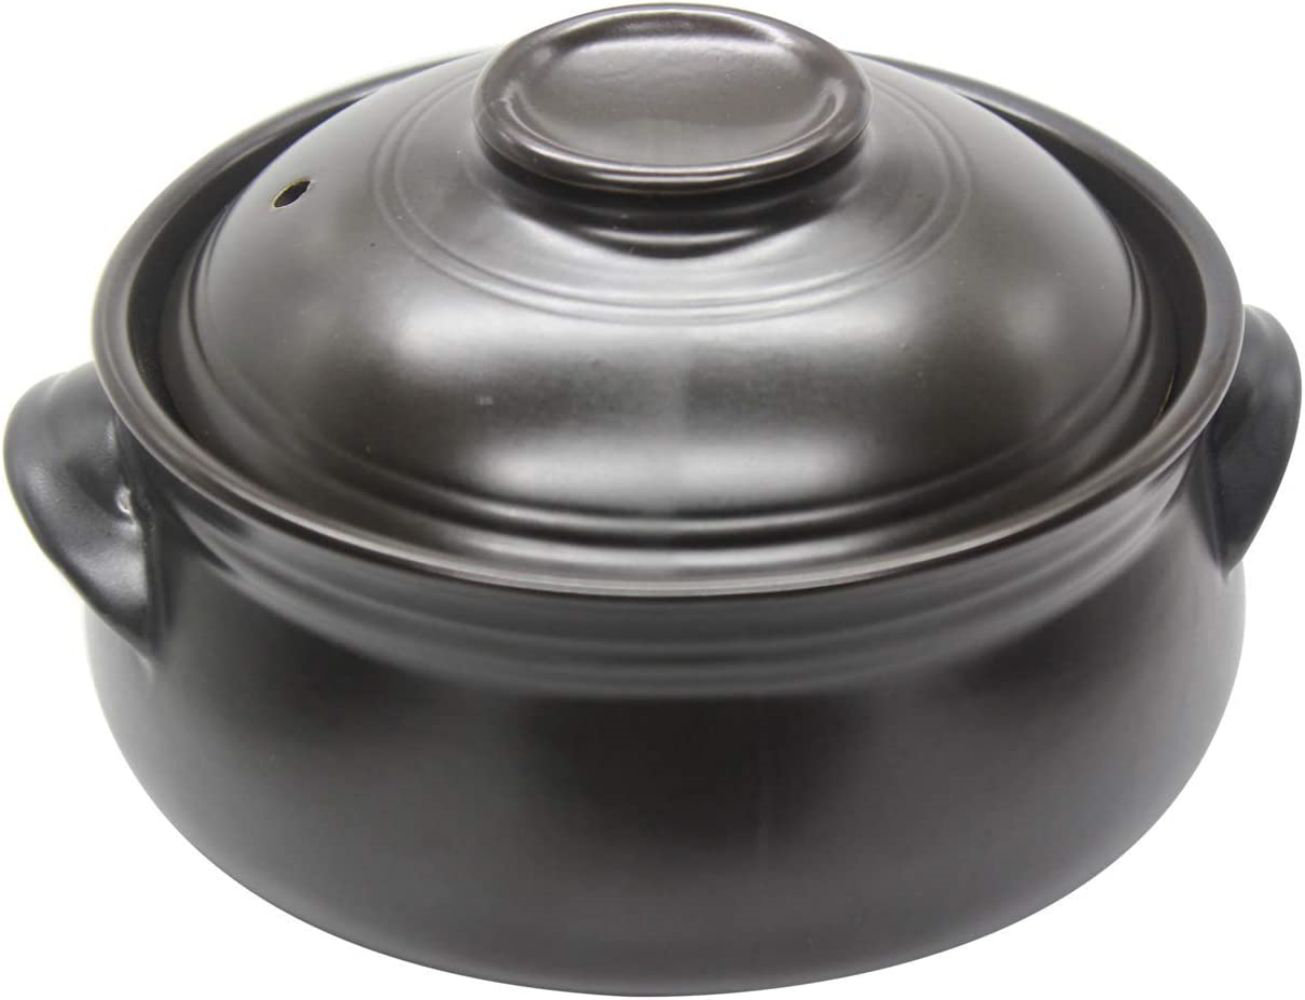 Herzog Tiffany 1.05-Quart Ceramic Stock Pot in the Cooking Pots